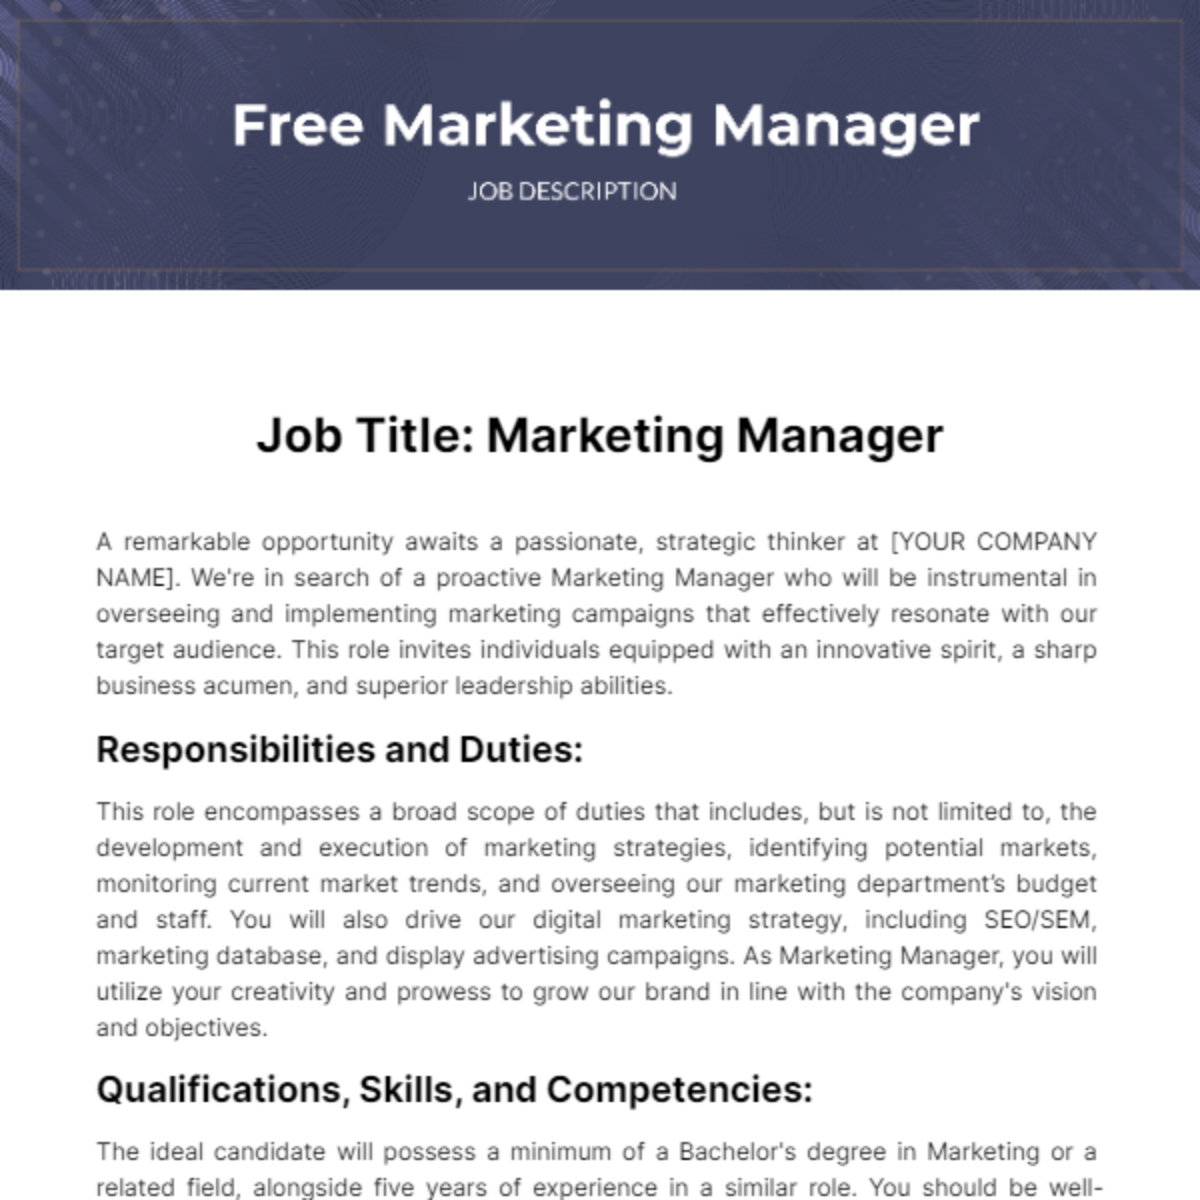 Free Marketing Manager Job Description Template